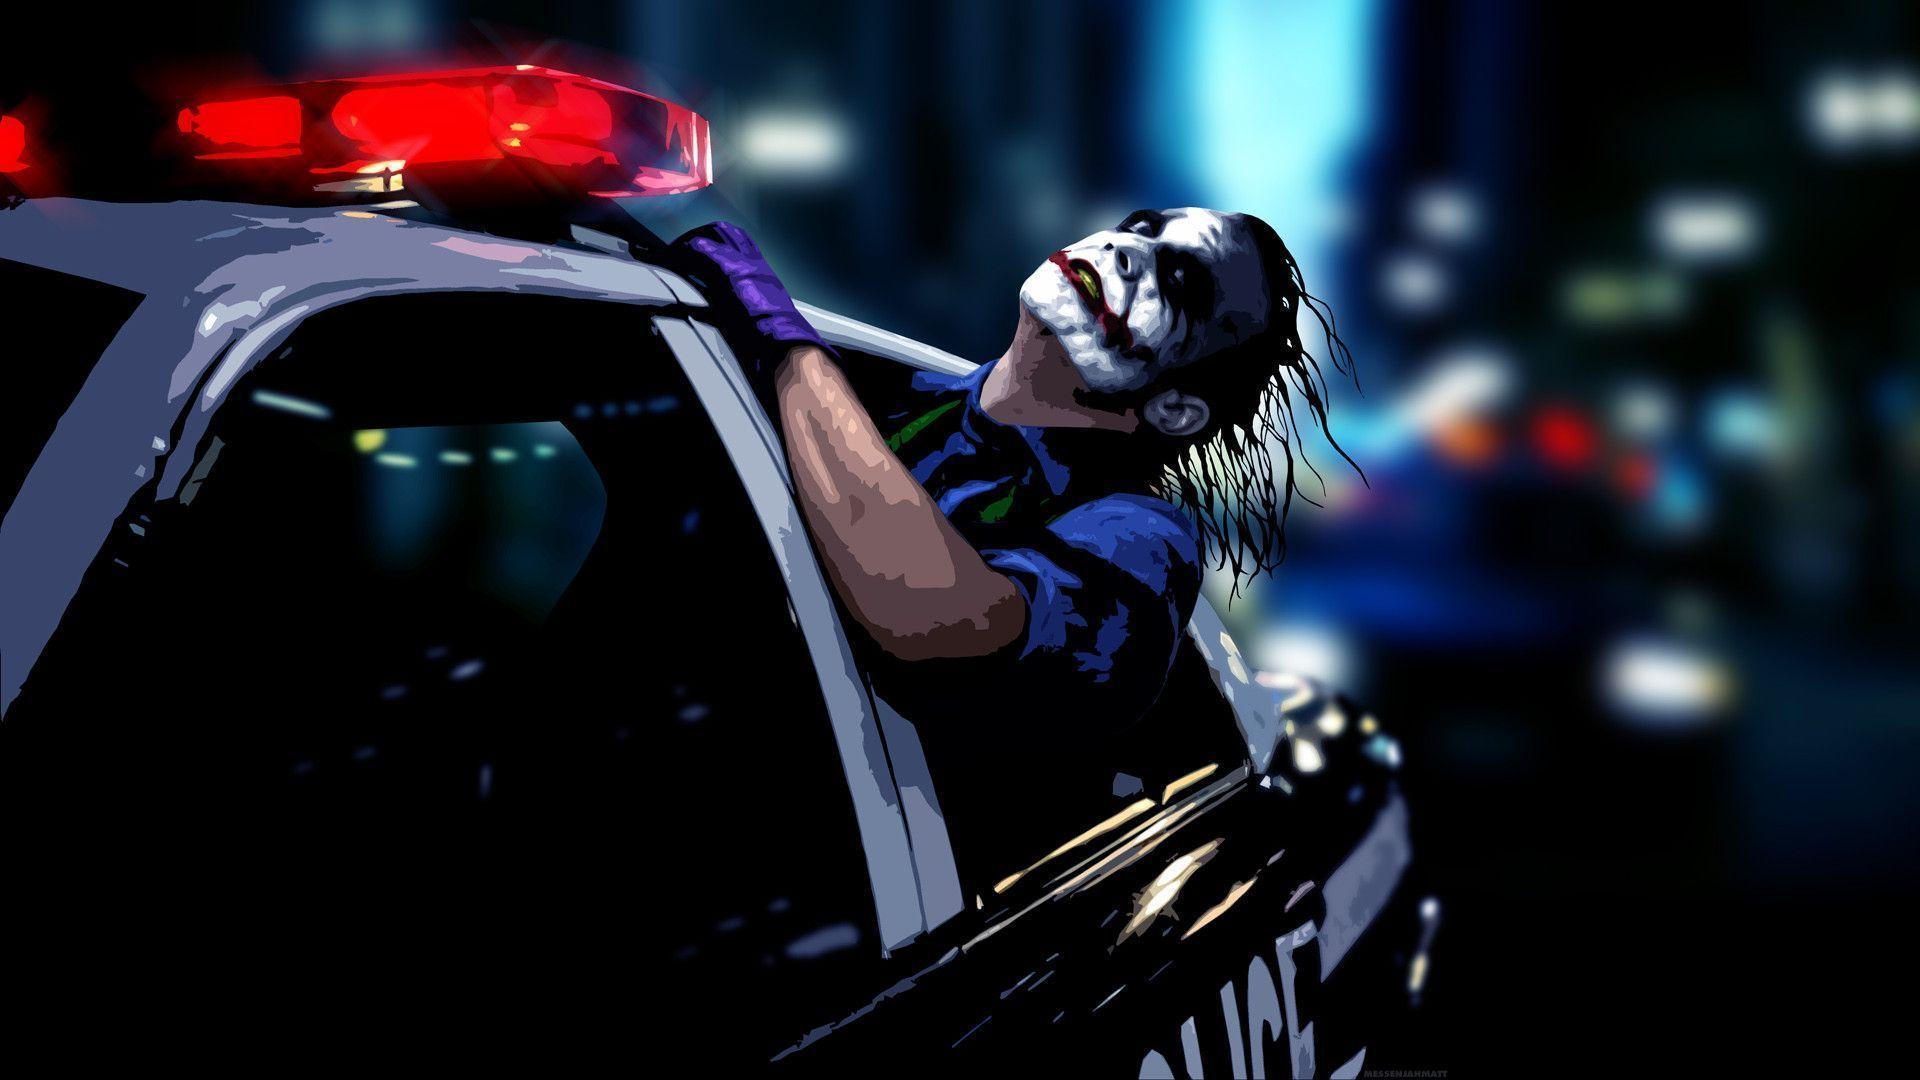 Joker The Dark Knight Wallpaper 1600x1200 px Free Download